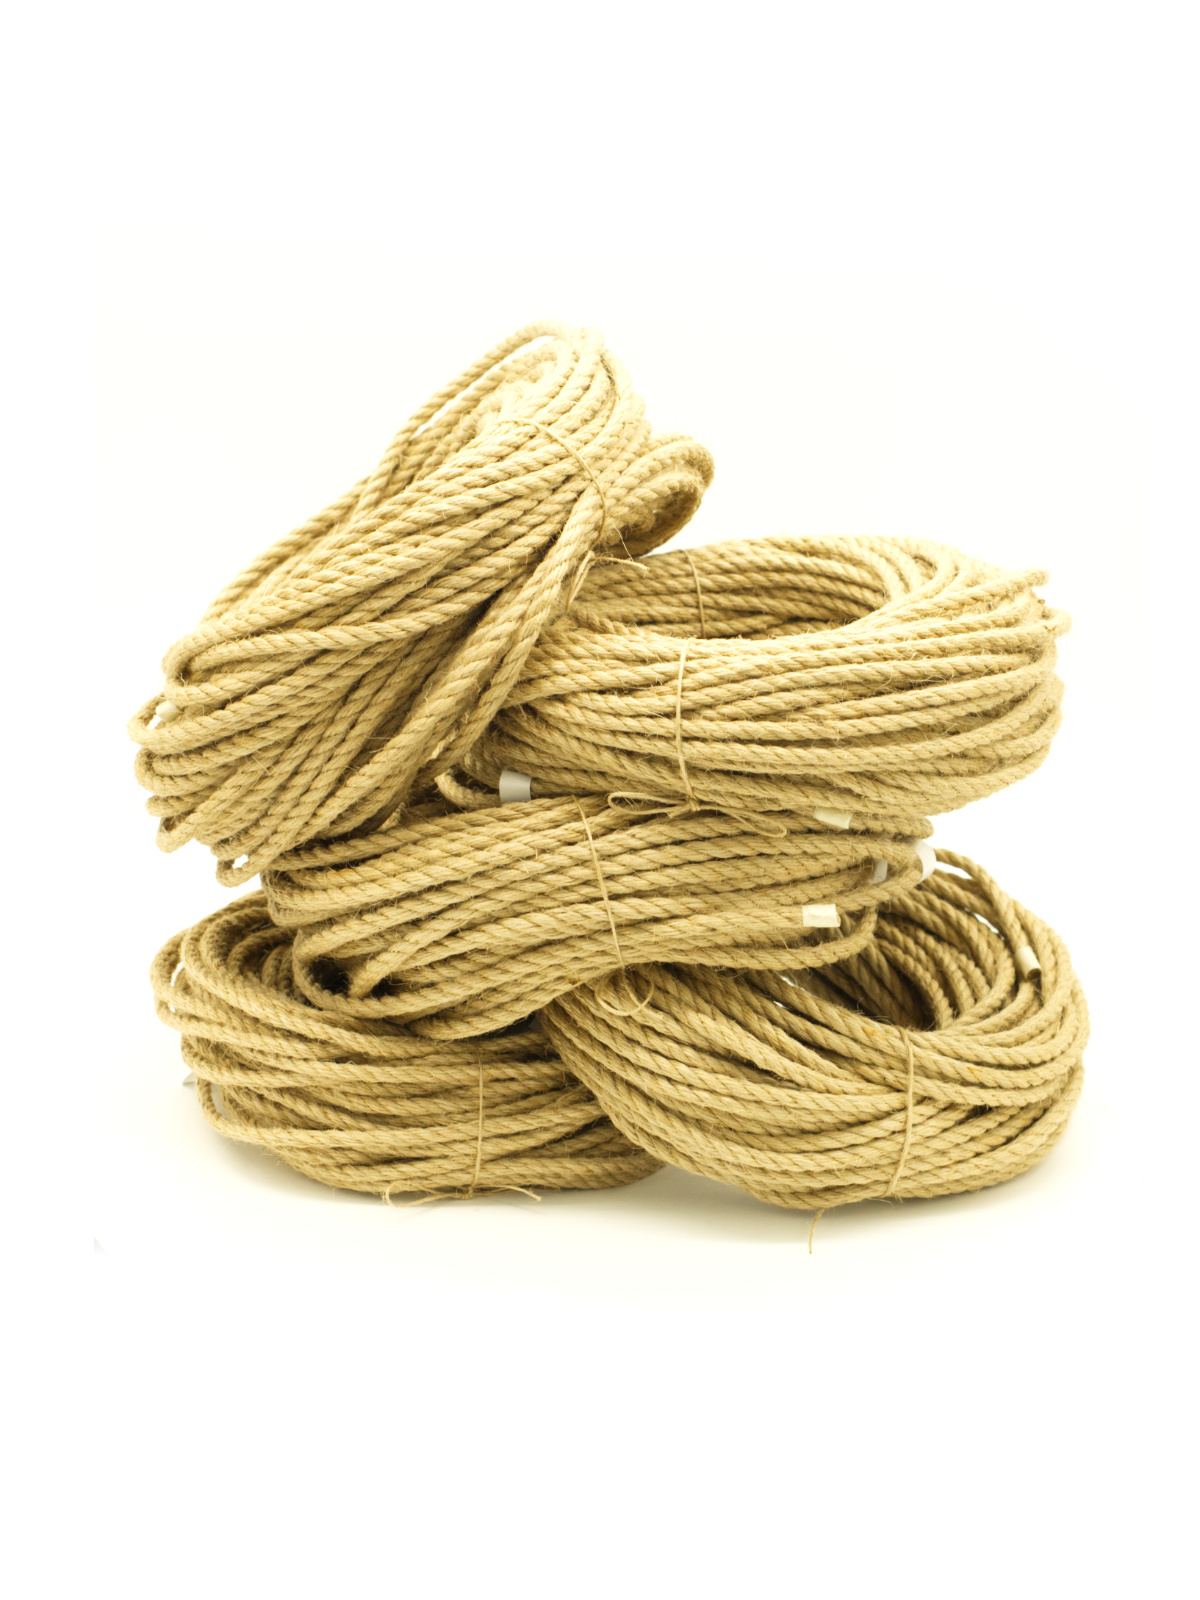 100m ∅ 5mm raw jute rope, AMATSUNAWA 27, JBO-free, for DIY processing